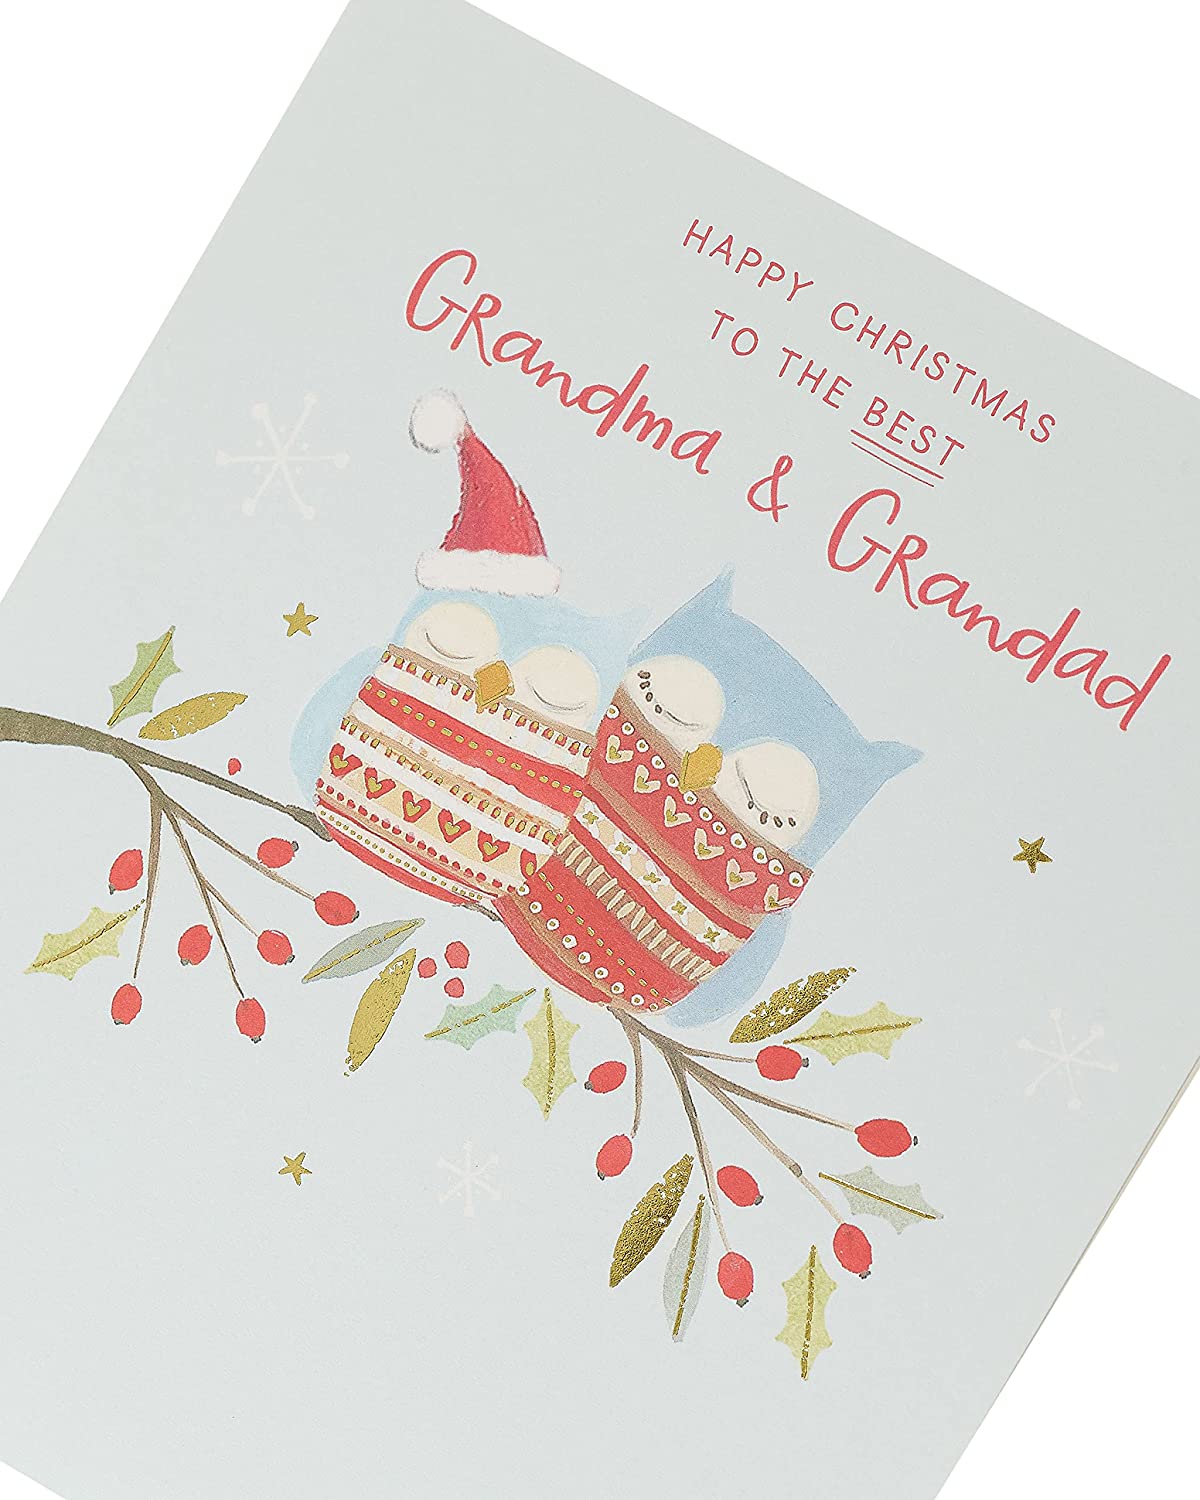 Grandma and Grandad Christmas Card Owls Design 